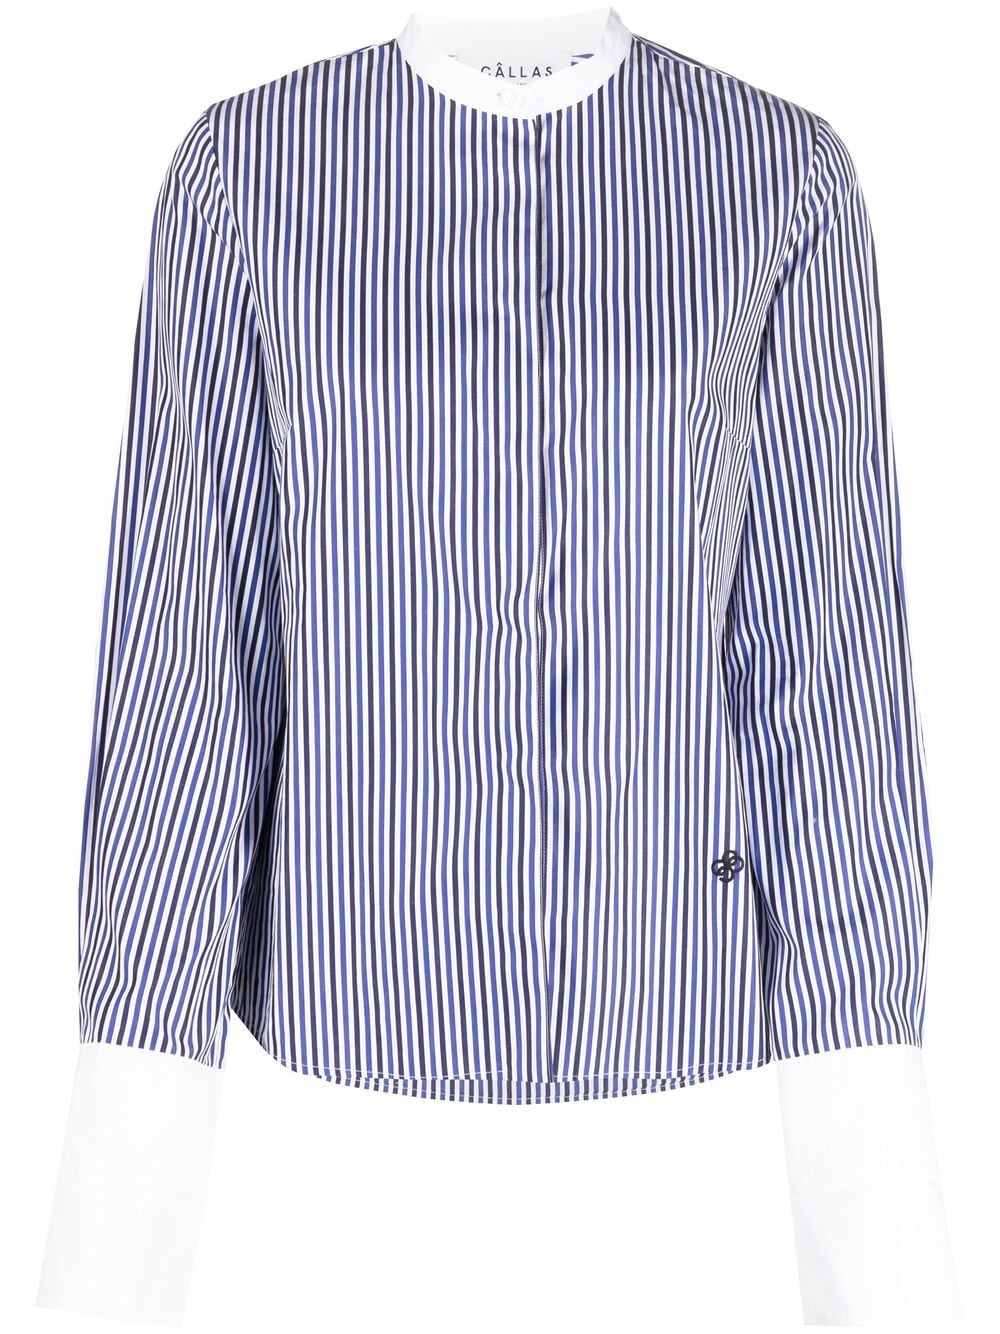 Câllas Milano striped long-sleeved shirt - White von Câllas Milano